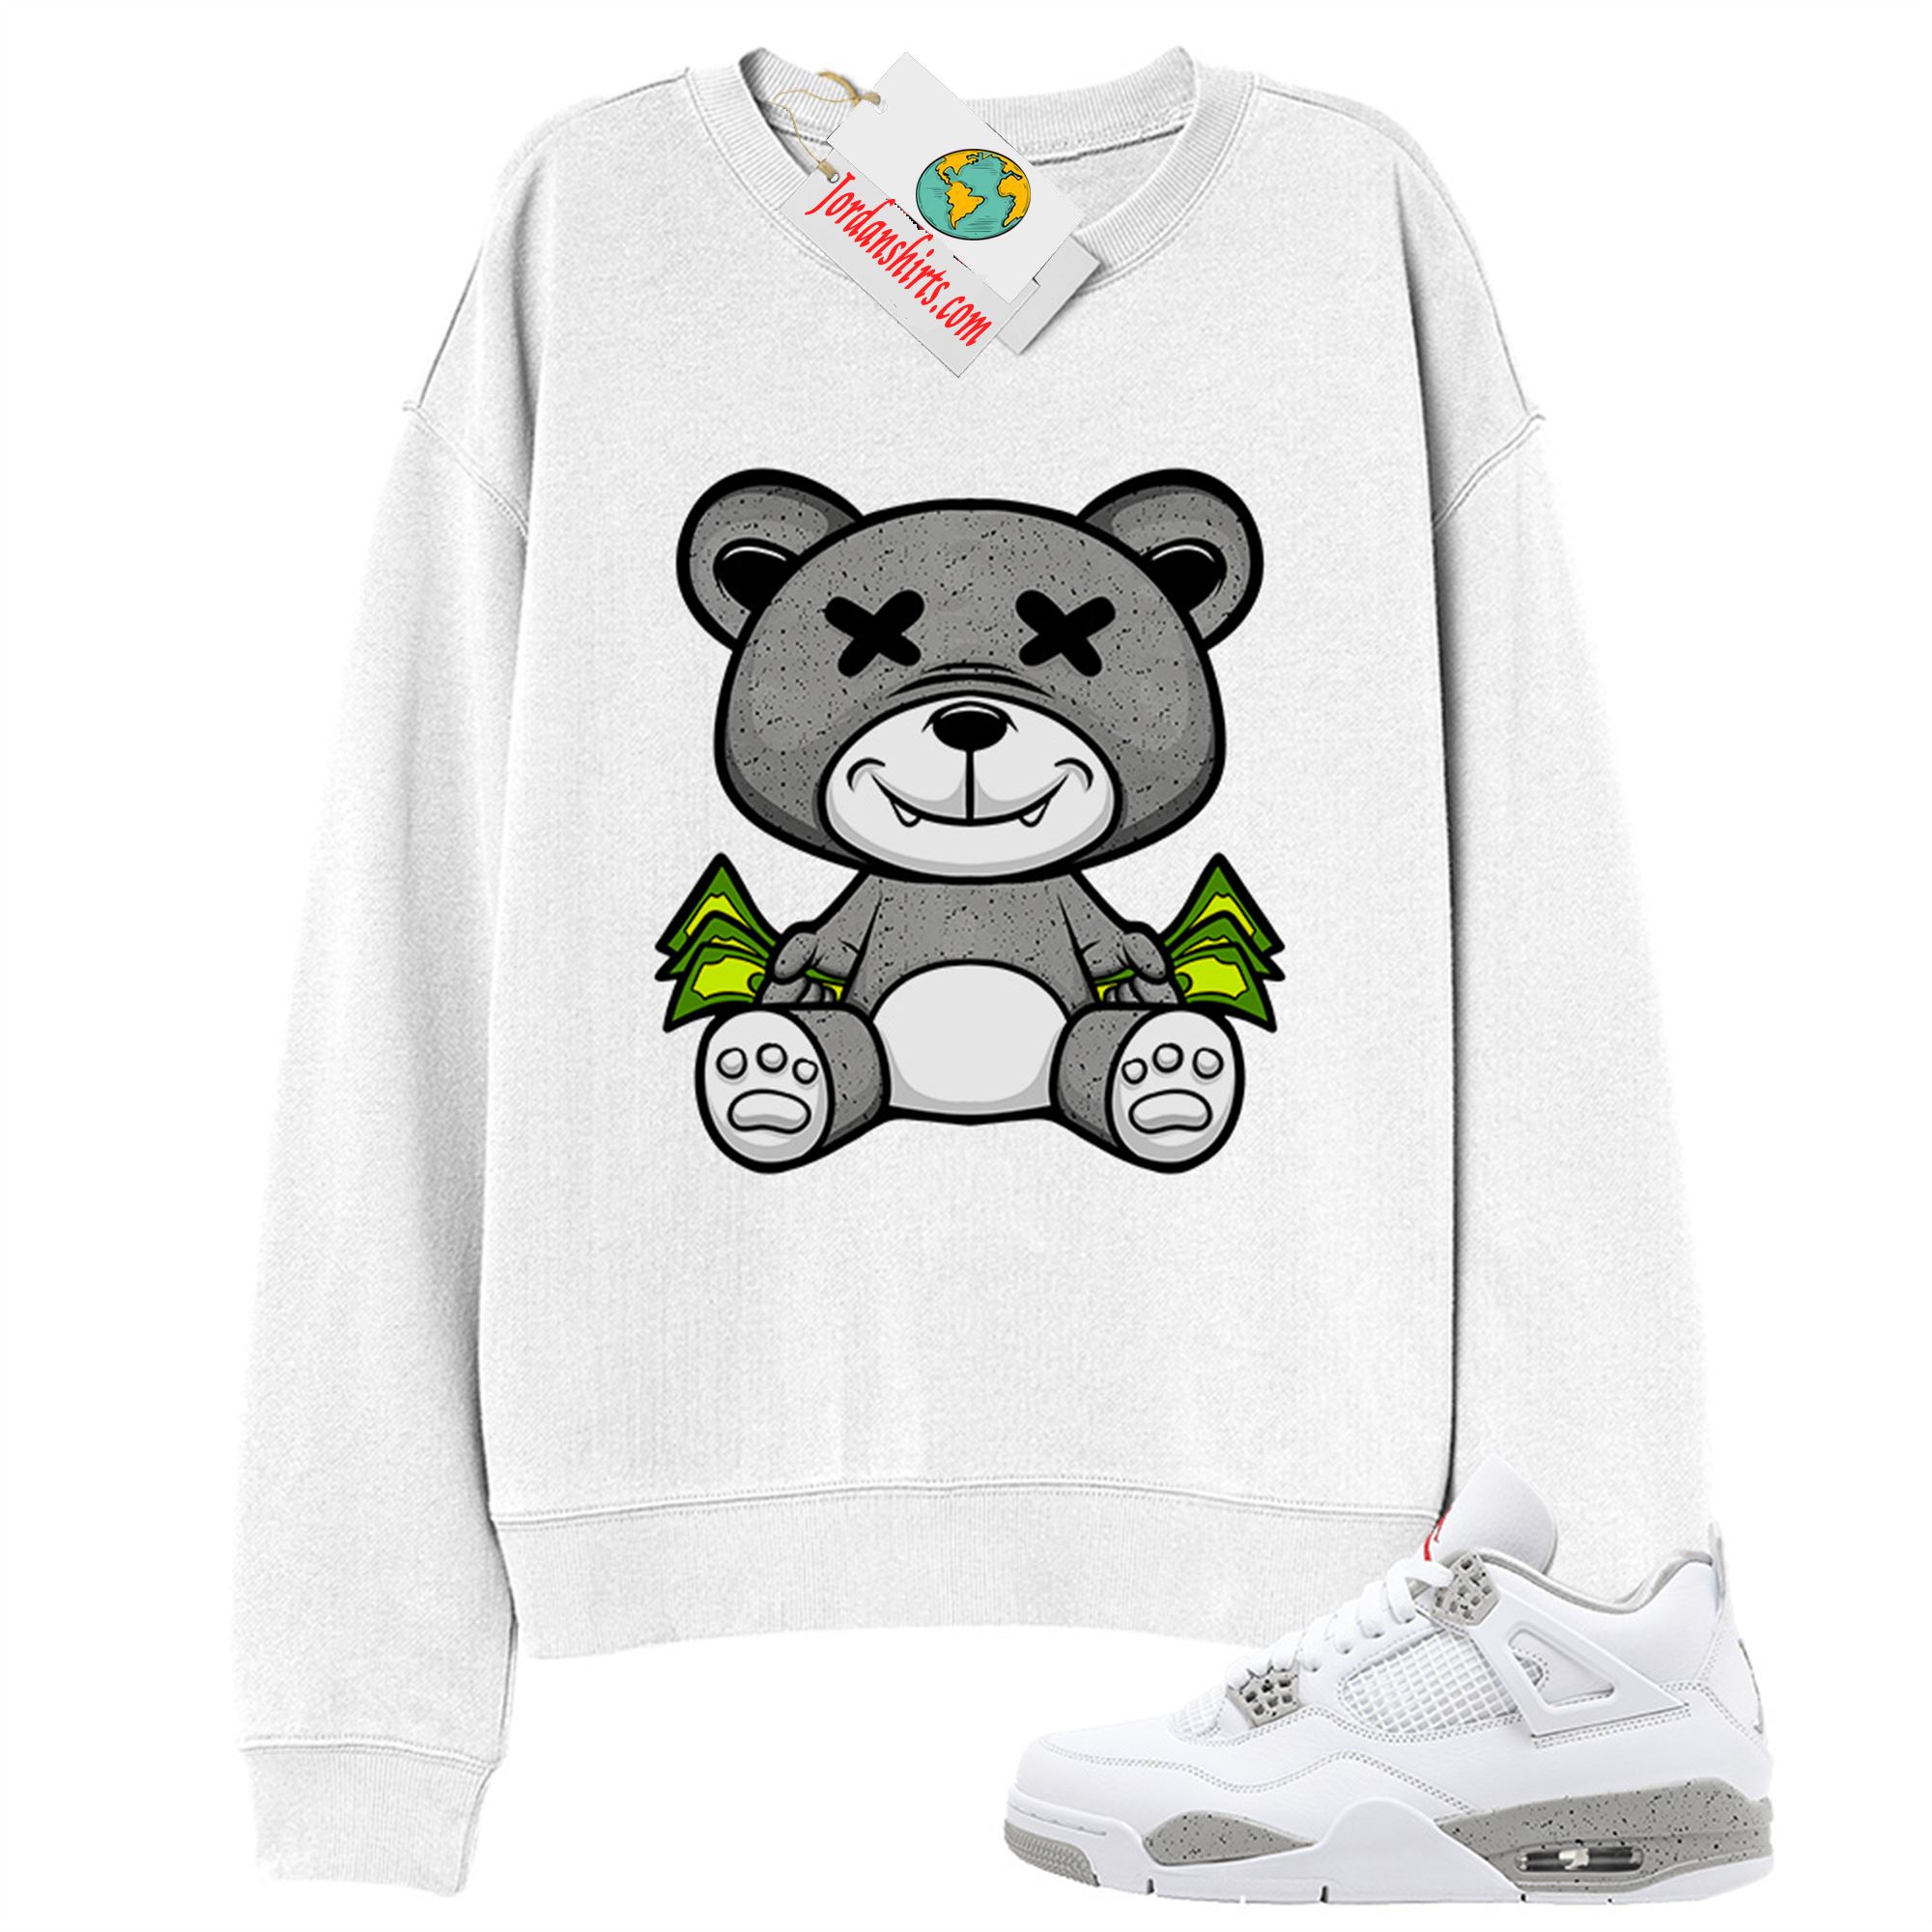 Jordan 4 Sweatshirt, Rich Teddy Bear White Sweatshirt Air Jordan 4 White Oreo 4s Size Up To 5xl